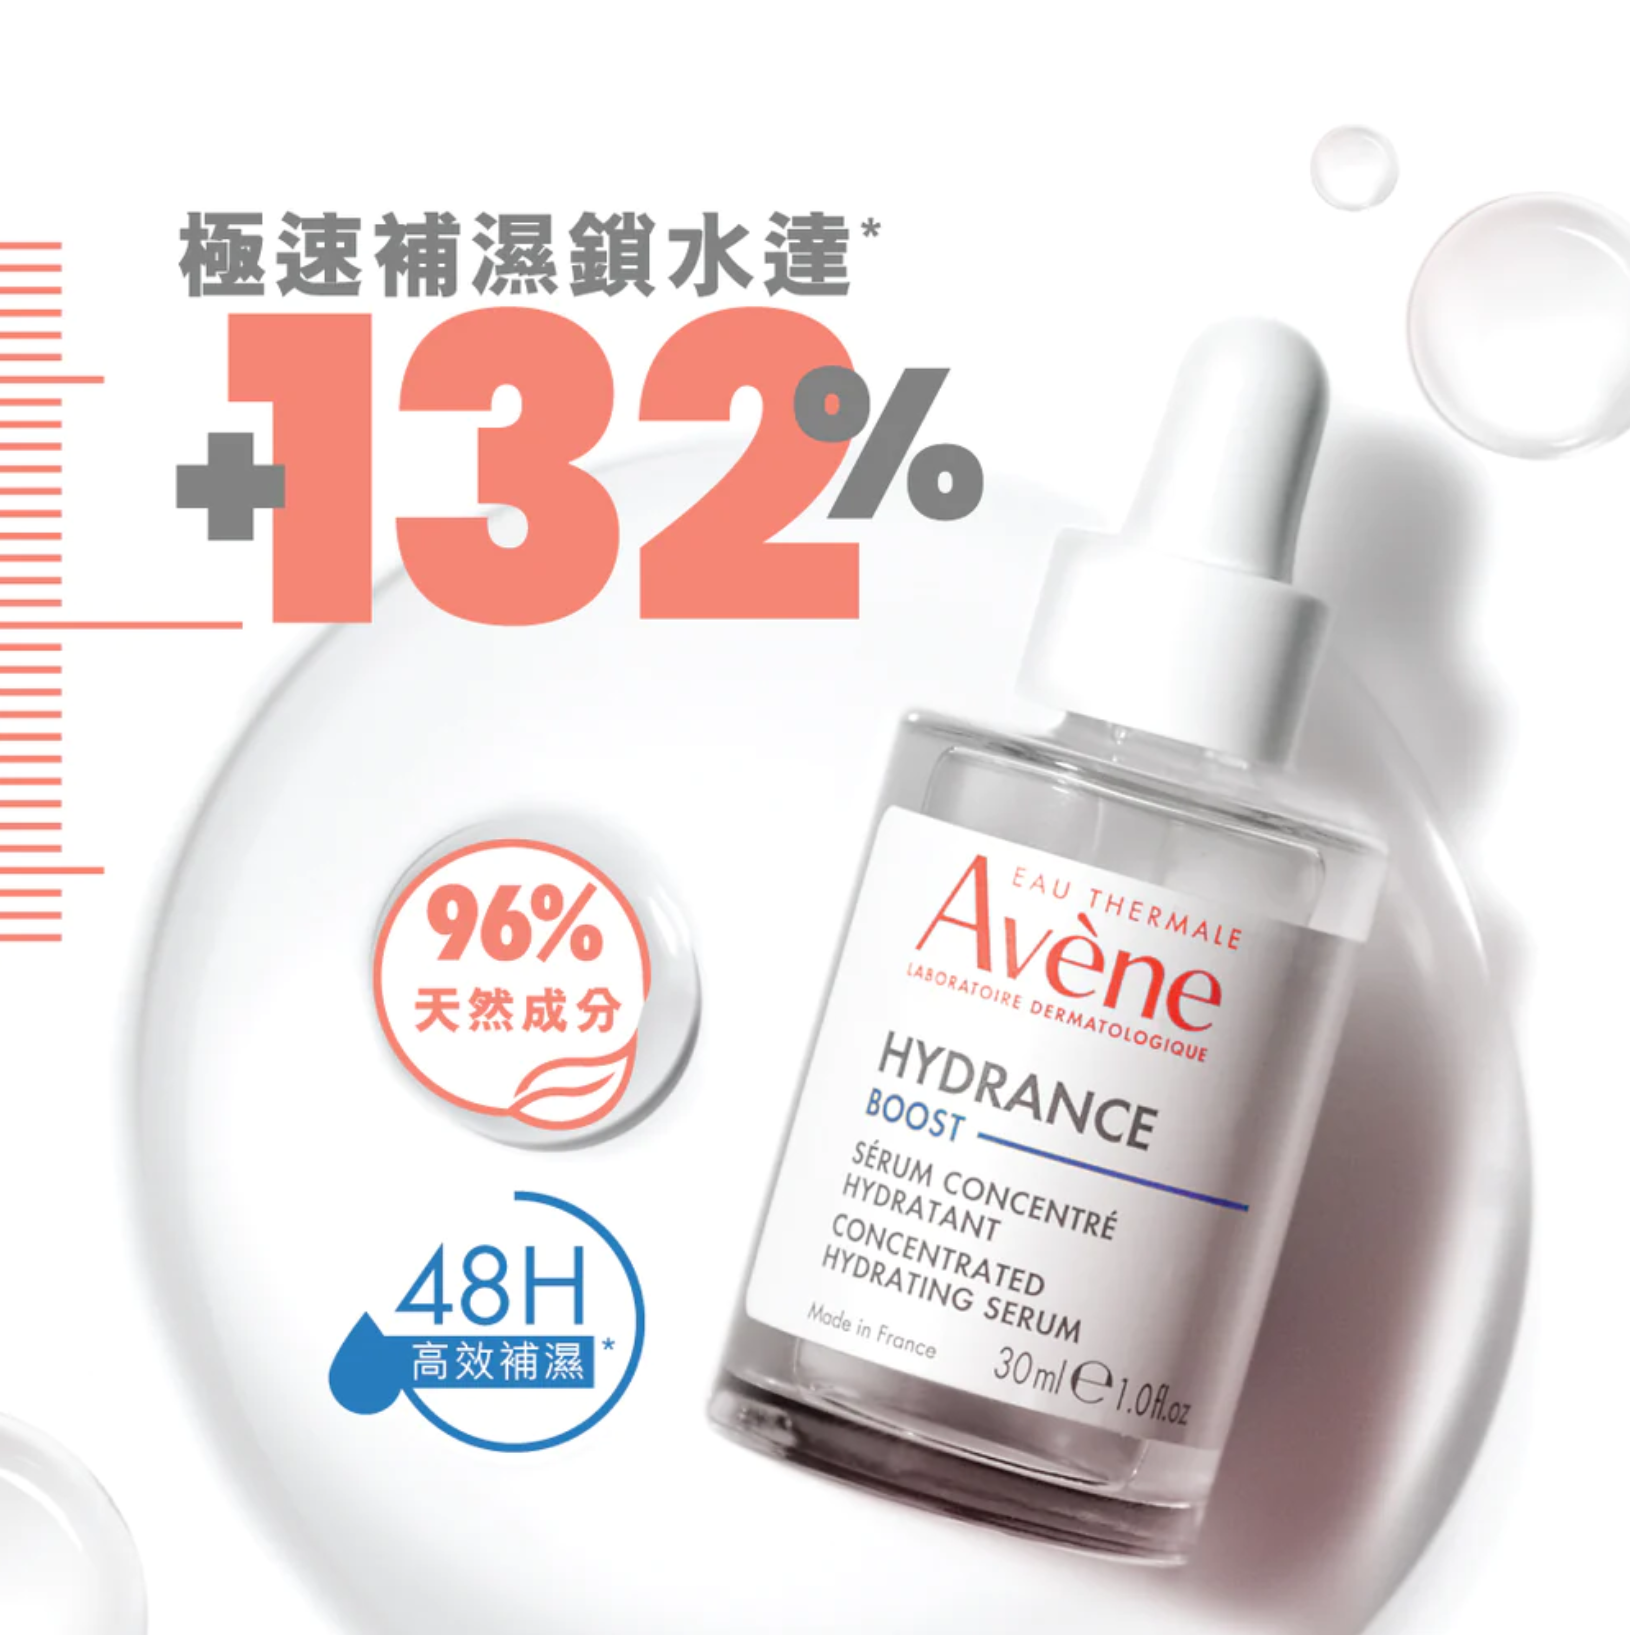 Avene Hydrance Boost 極速保濕水漾精華 30 ml 極速補濕鎖水達132%